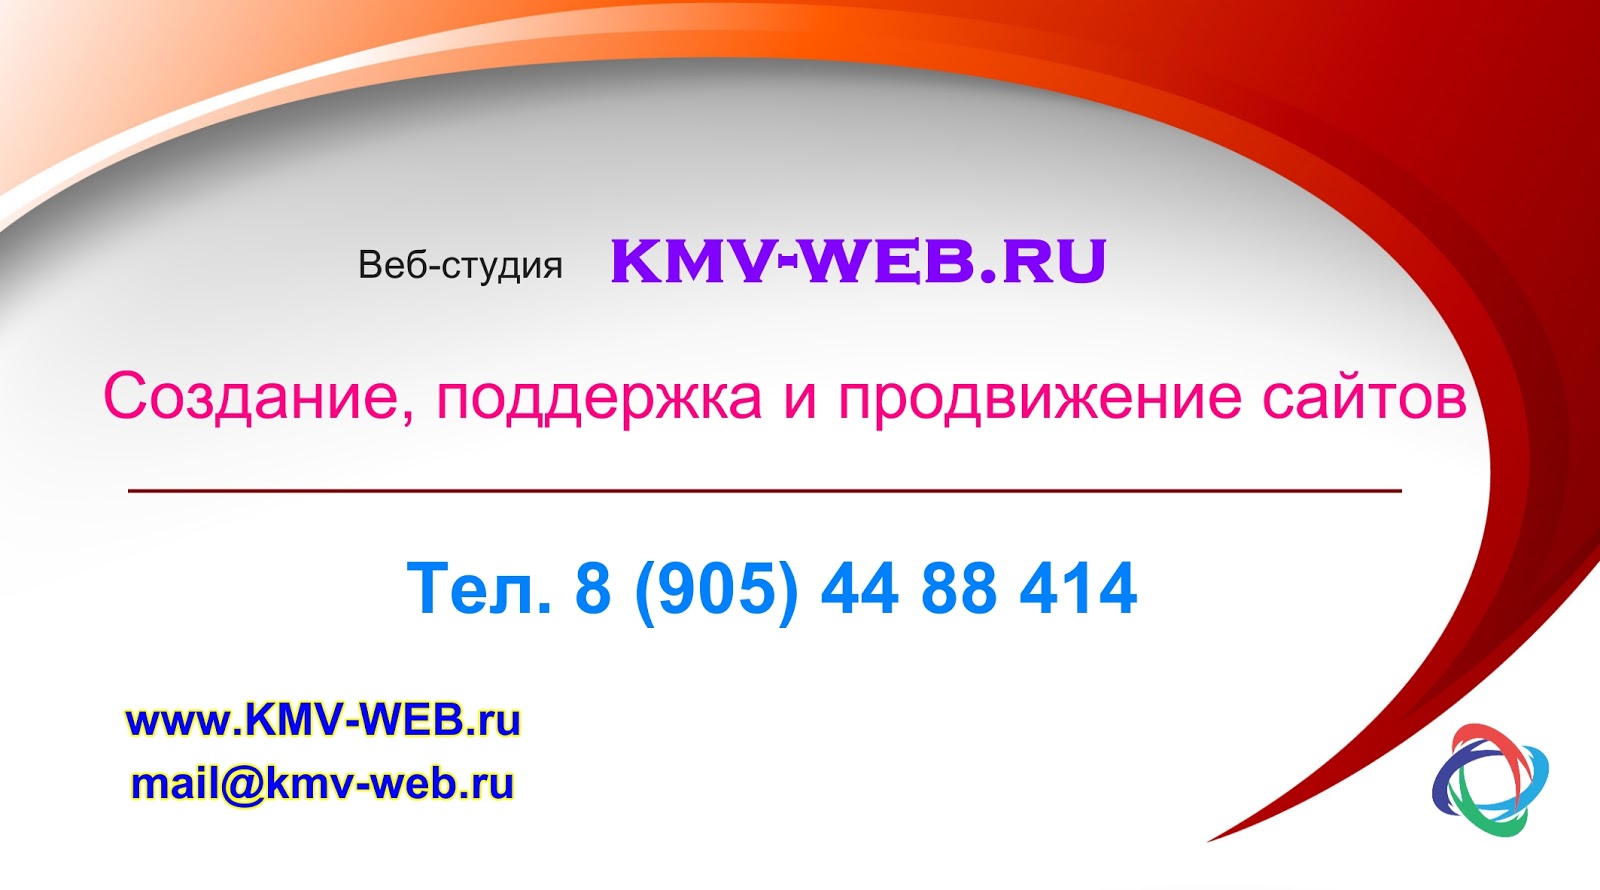 Web ru net. LWG KMV.